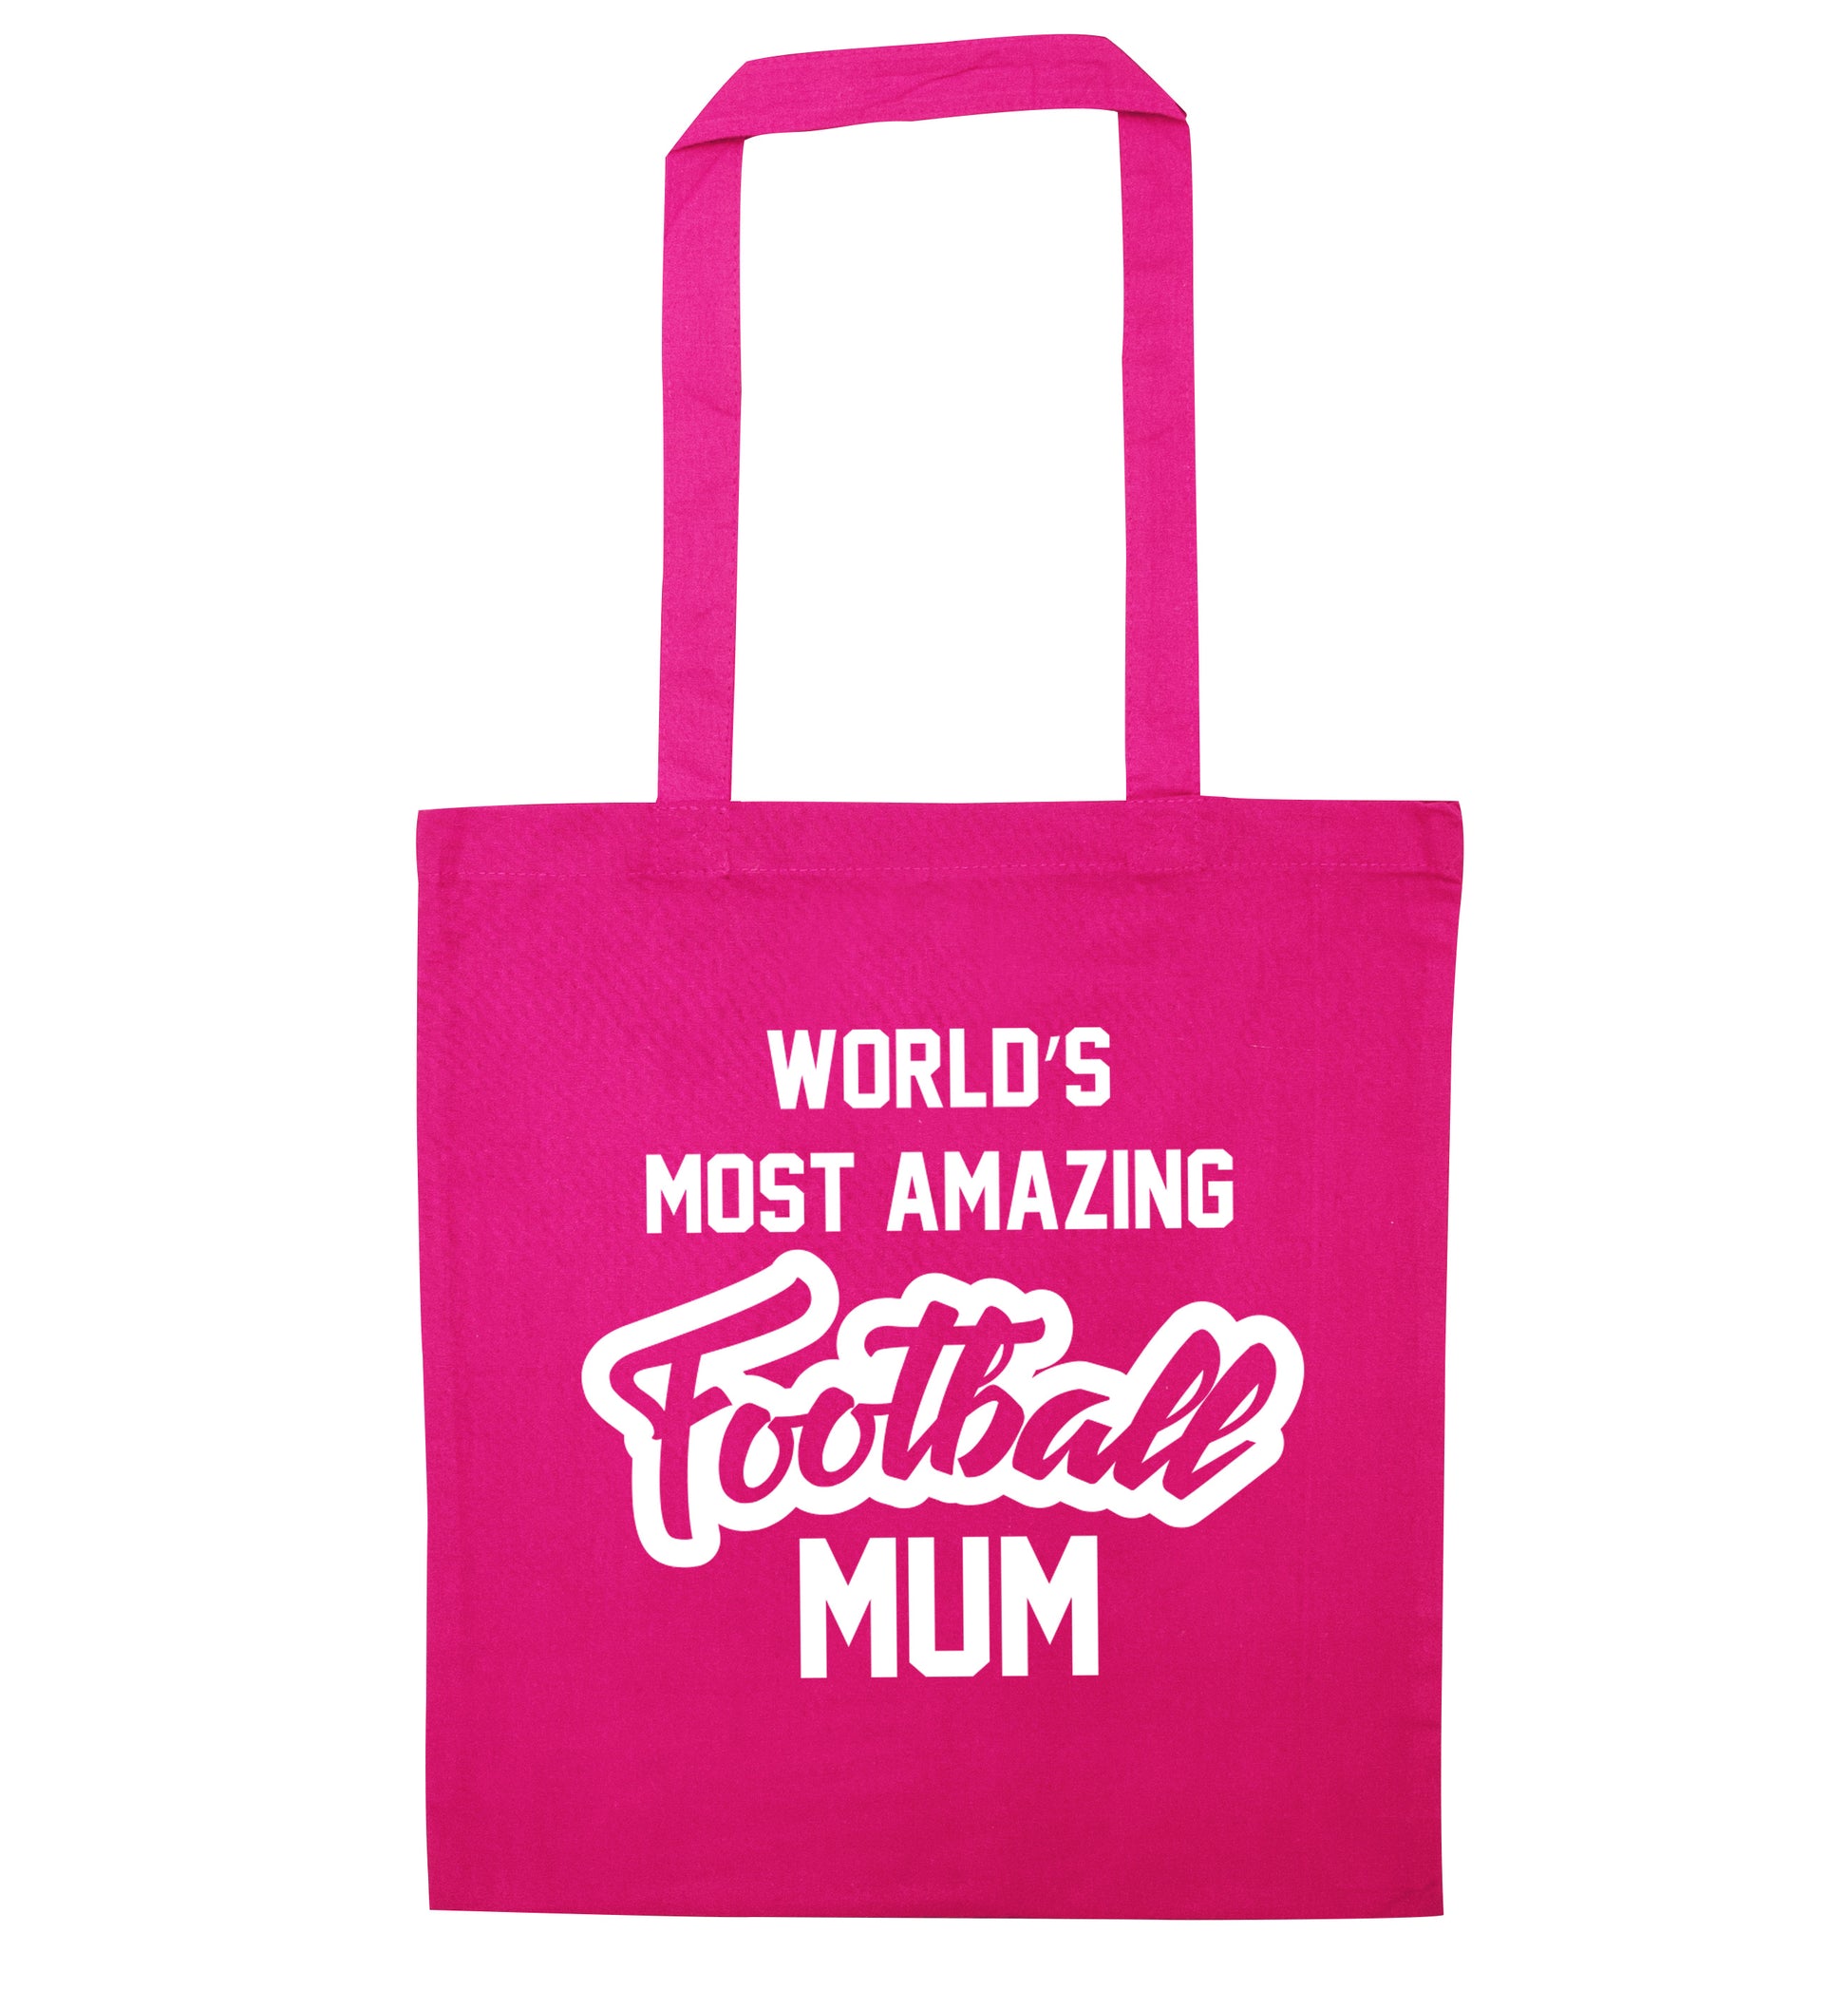 Worlds most amazing football mum pink tote bag